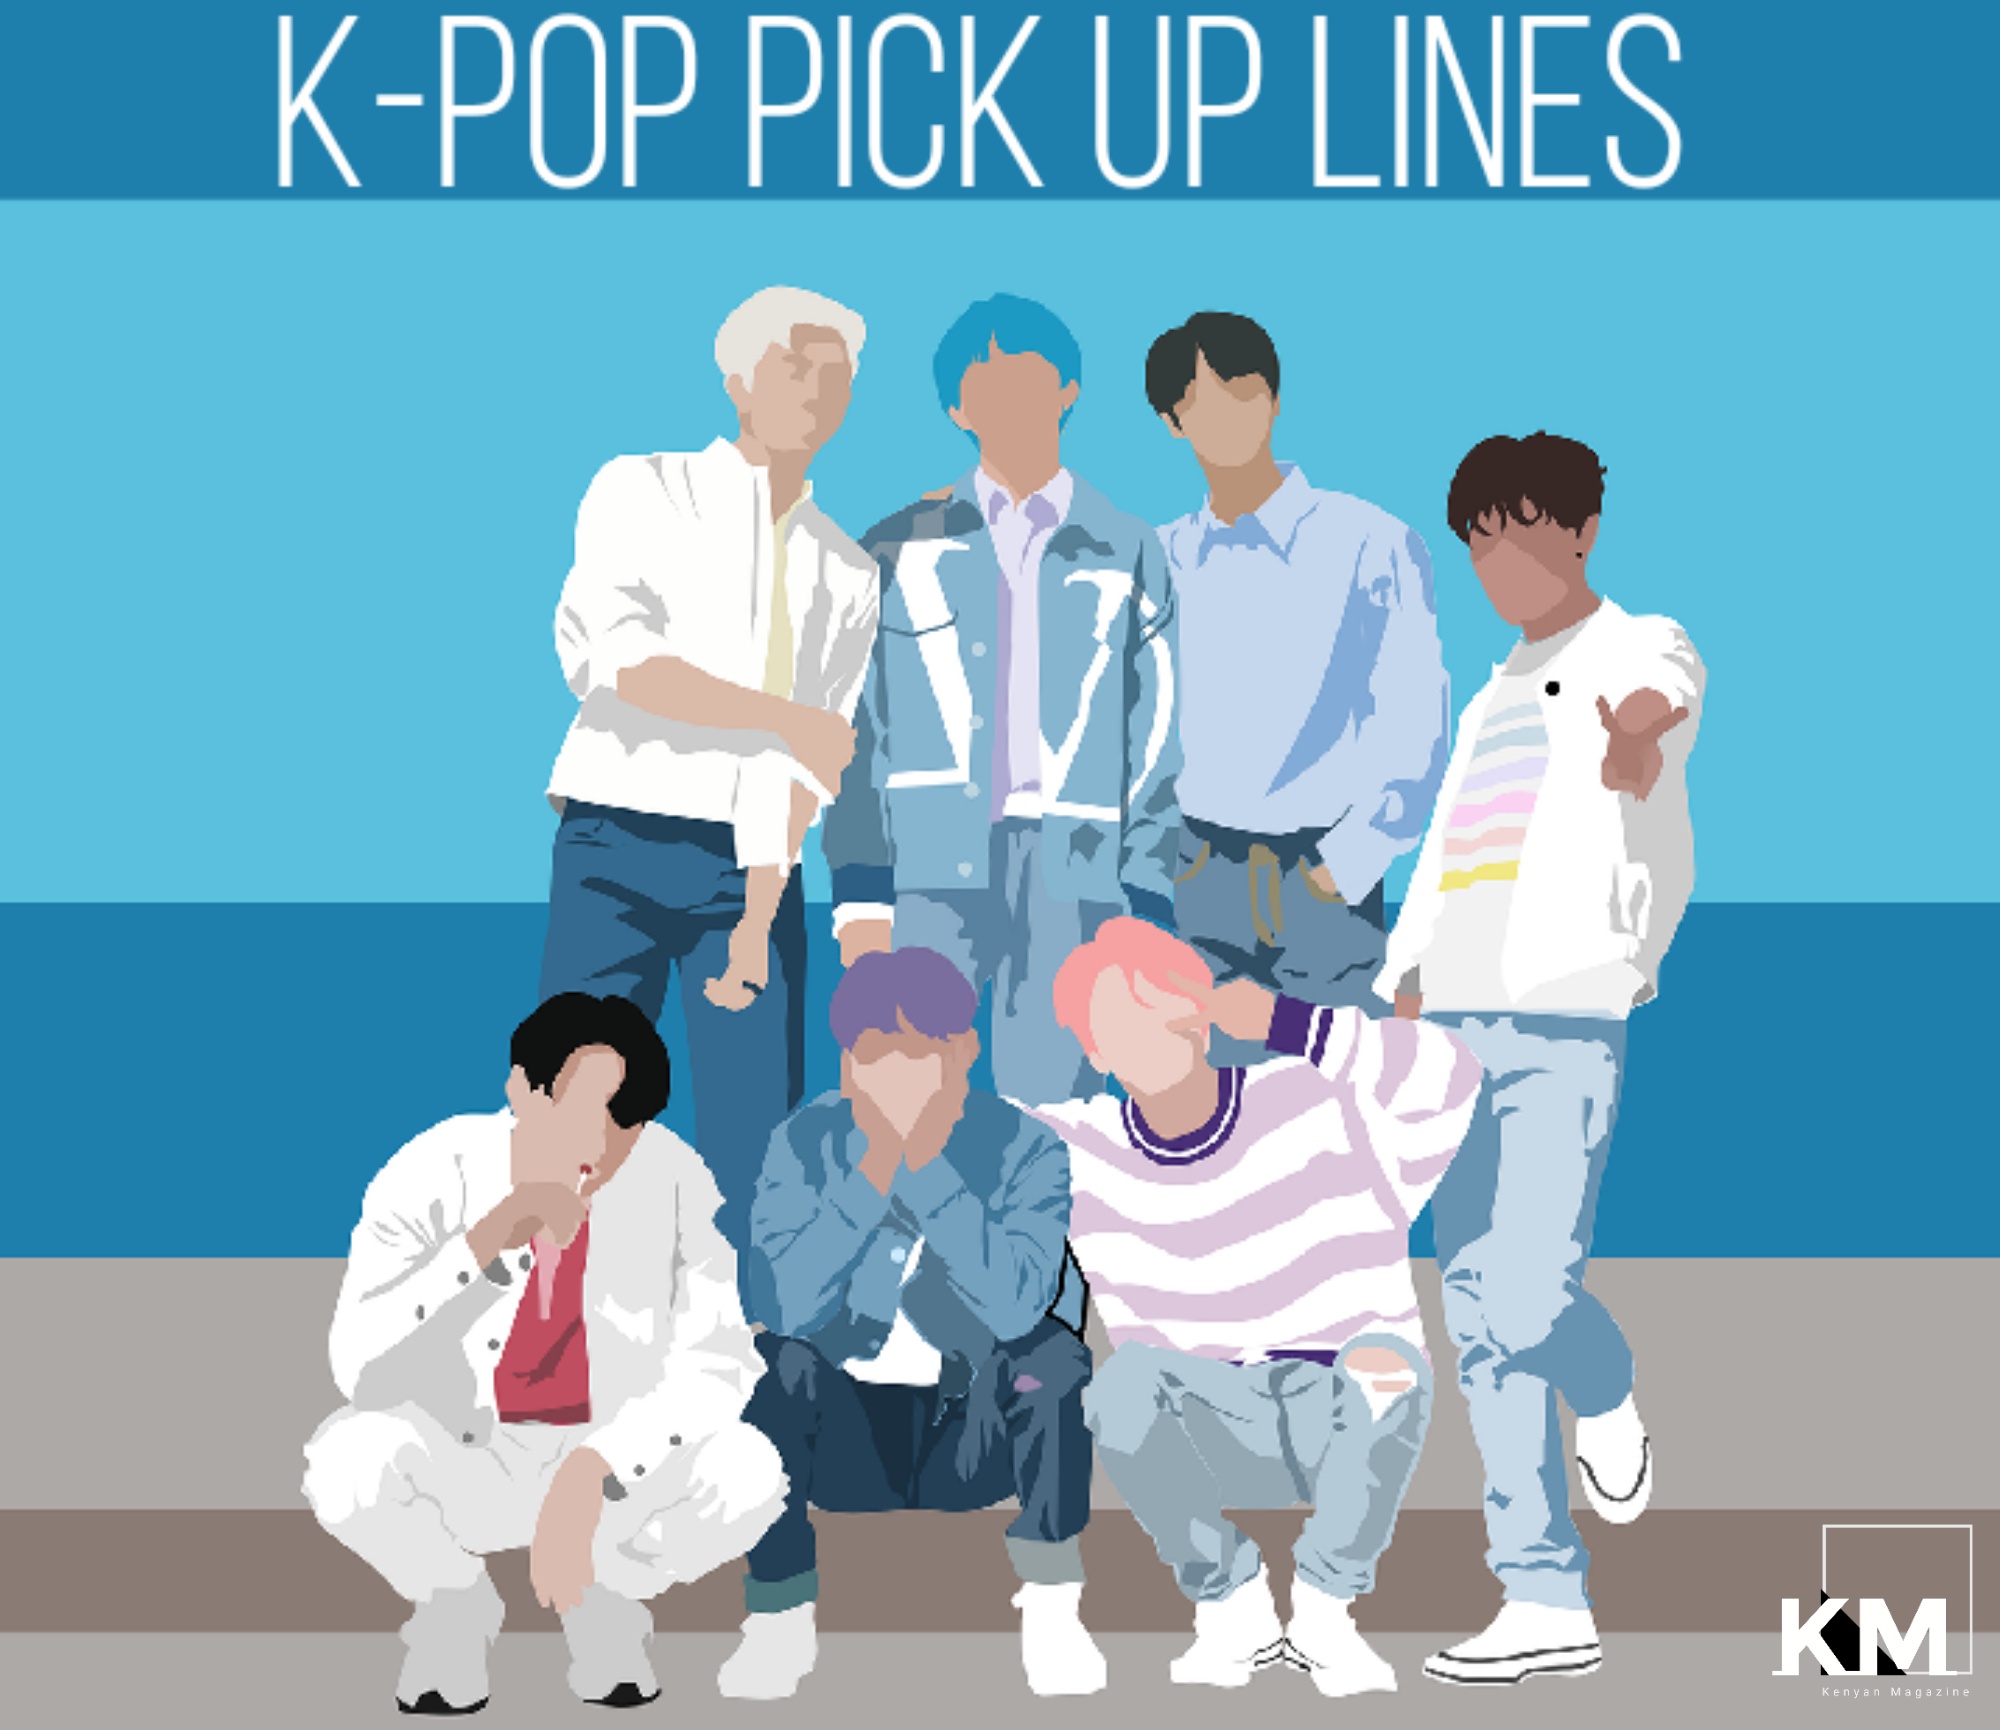 K-pop Pick up lines